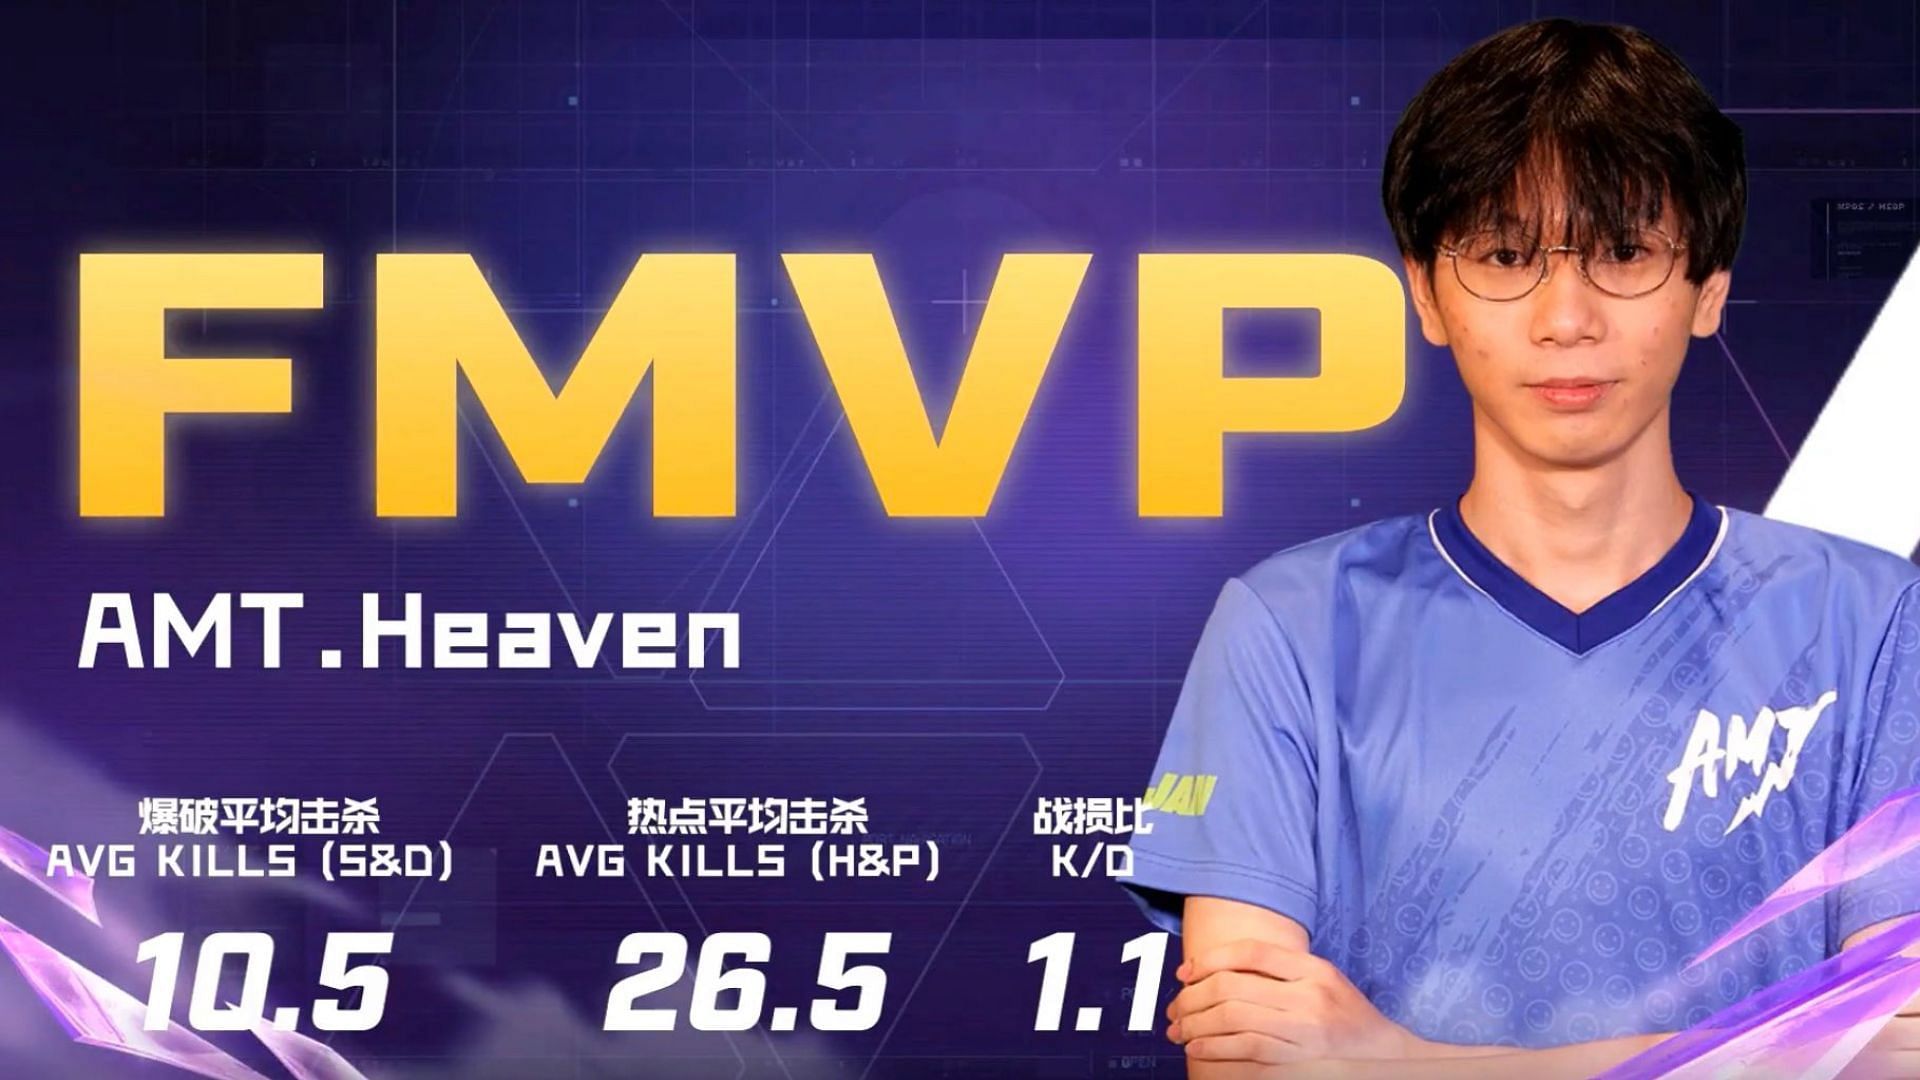 With a K/D ratio of 1.1, Heaven earned the MVP award (Image via Garena)